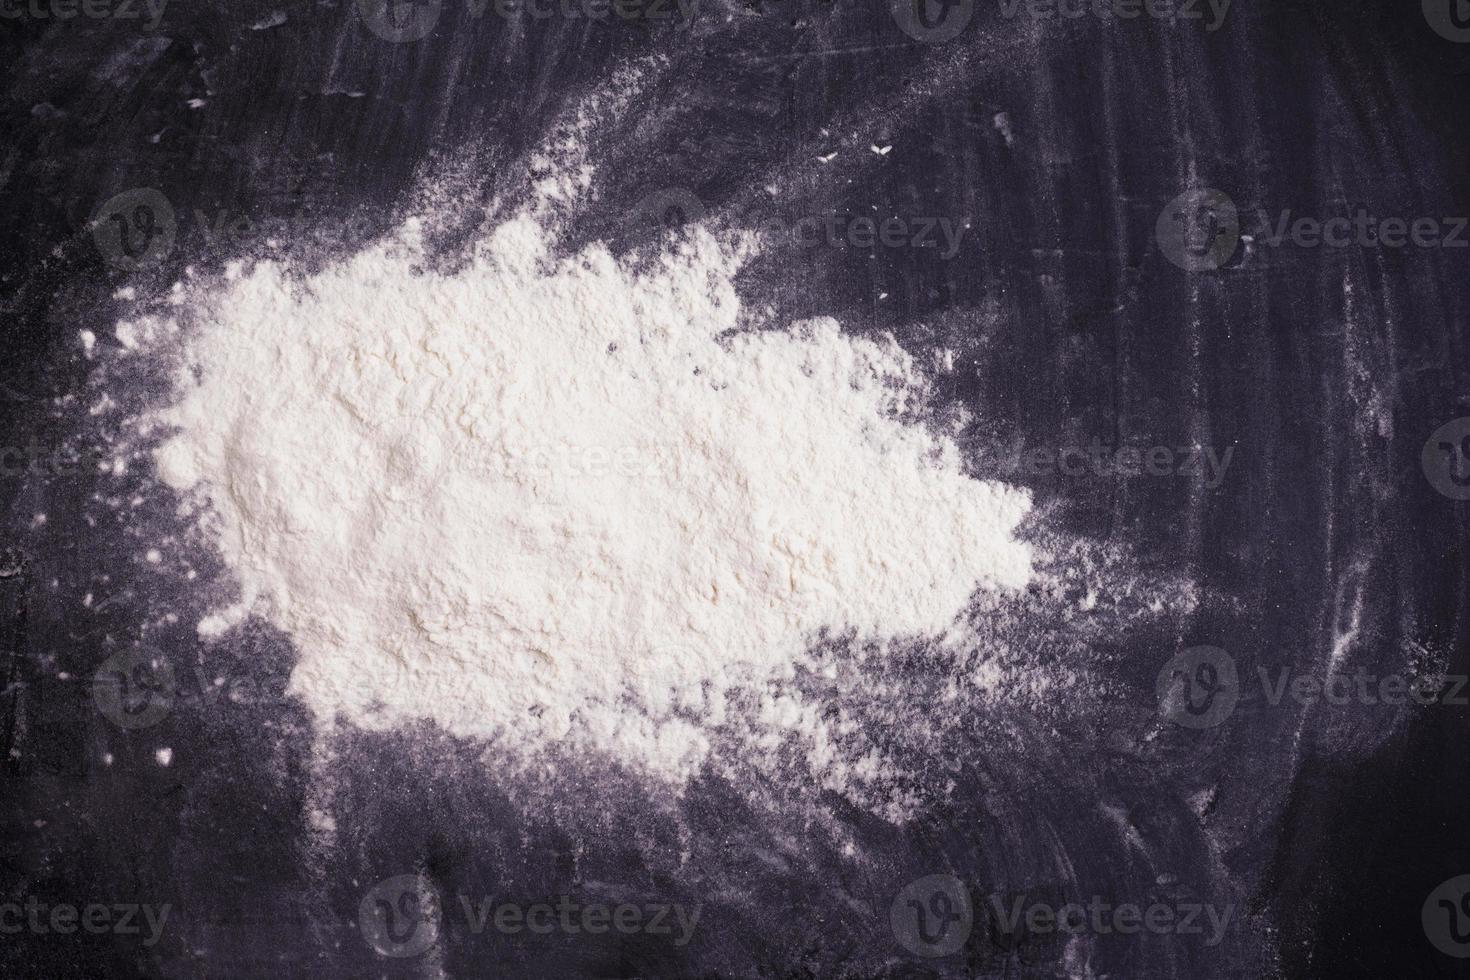 vit podder bomba de distribution av mjöl på en svart bakgrund foto